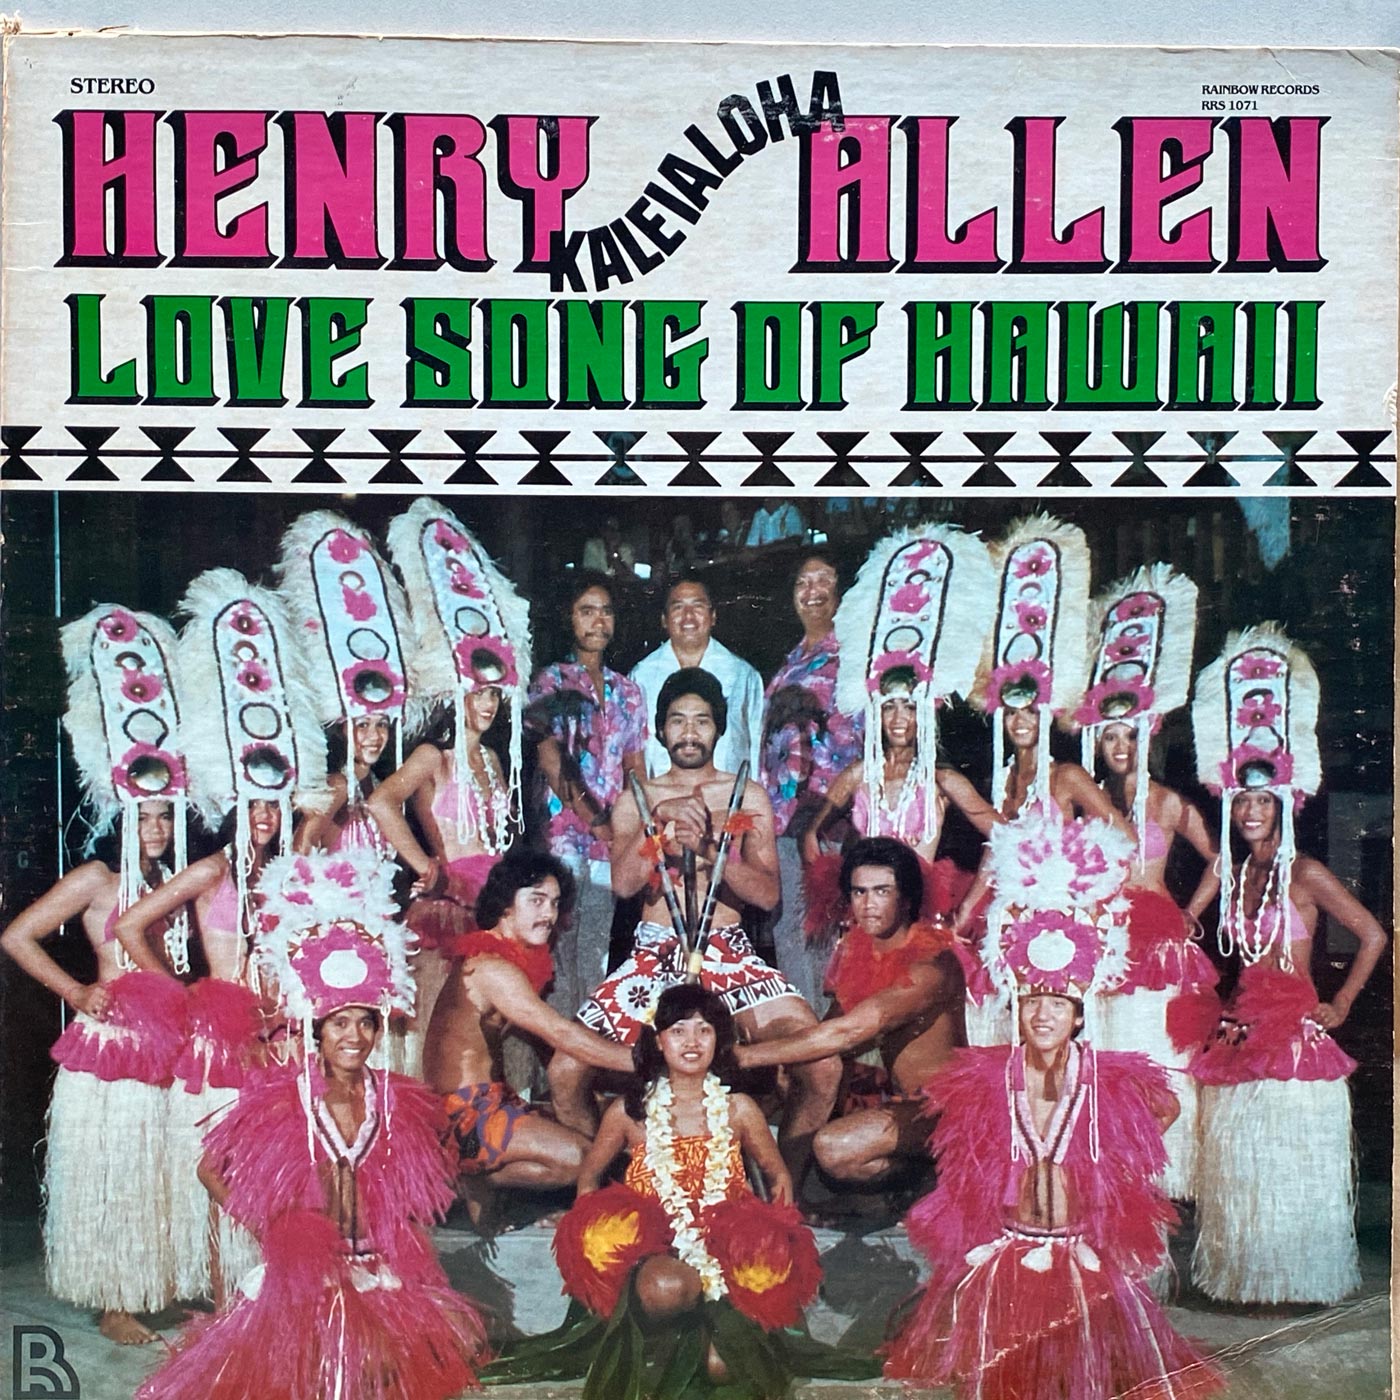 Henry Kaleialoha Allen - Love Song of Hawaii